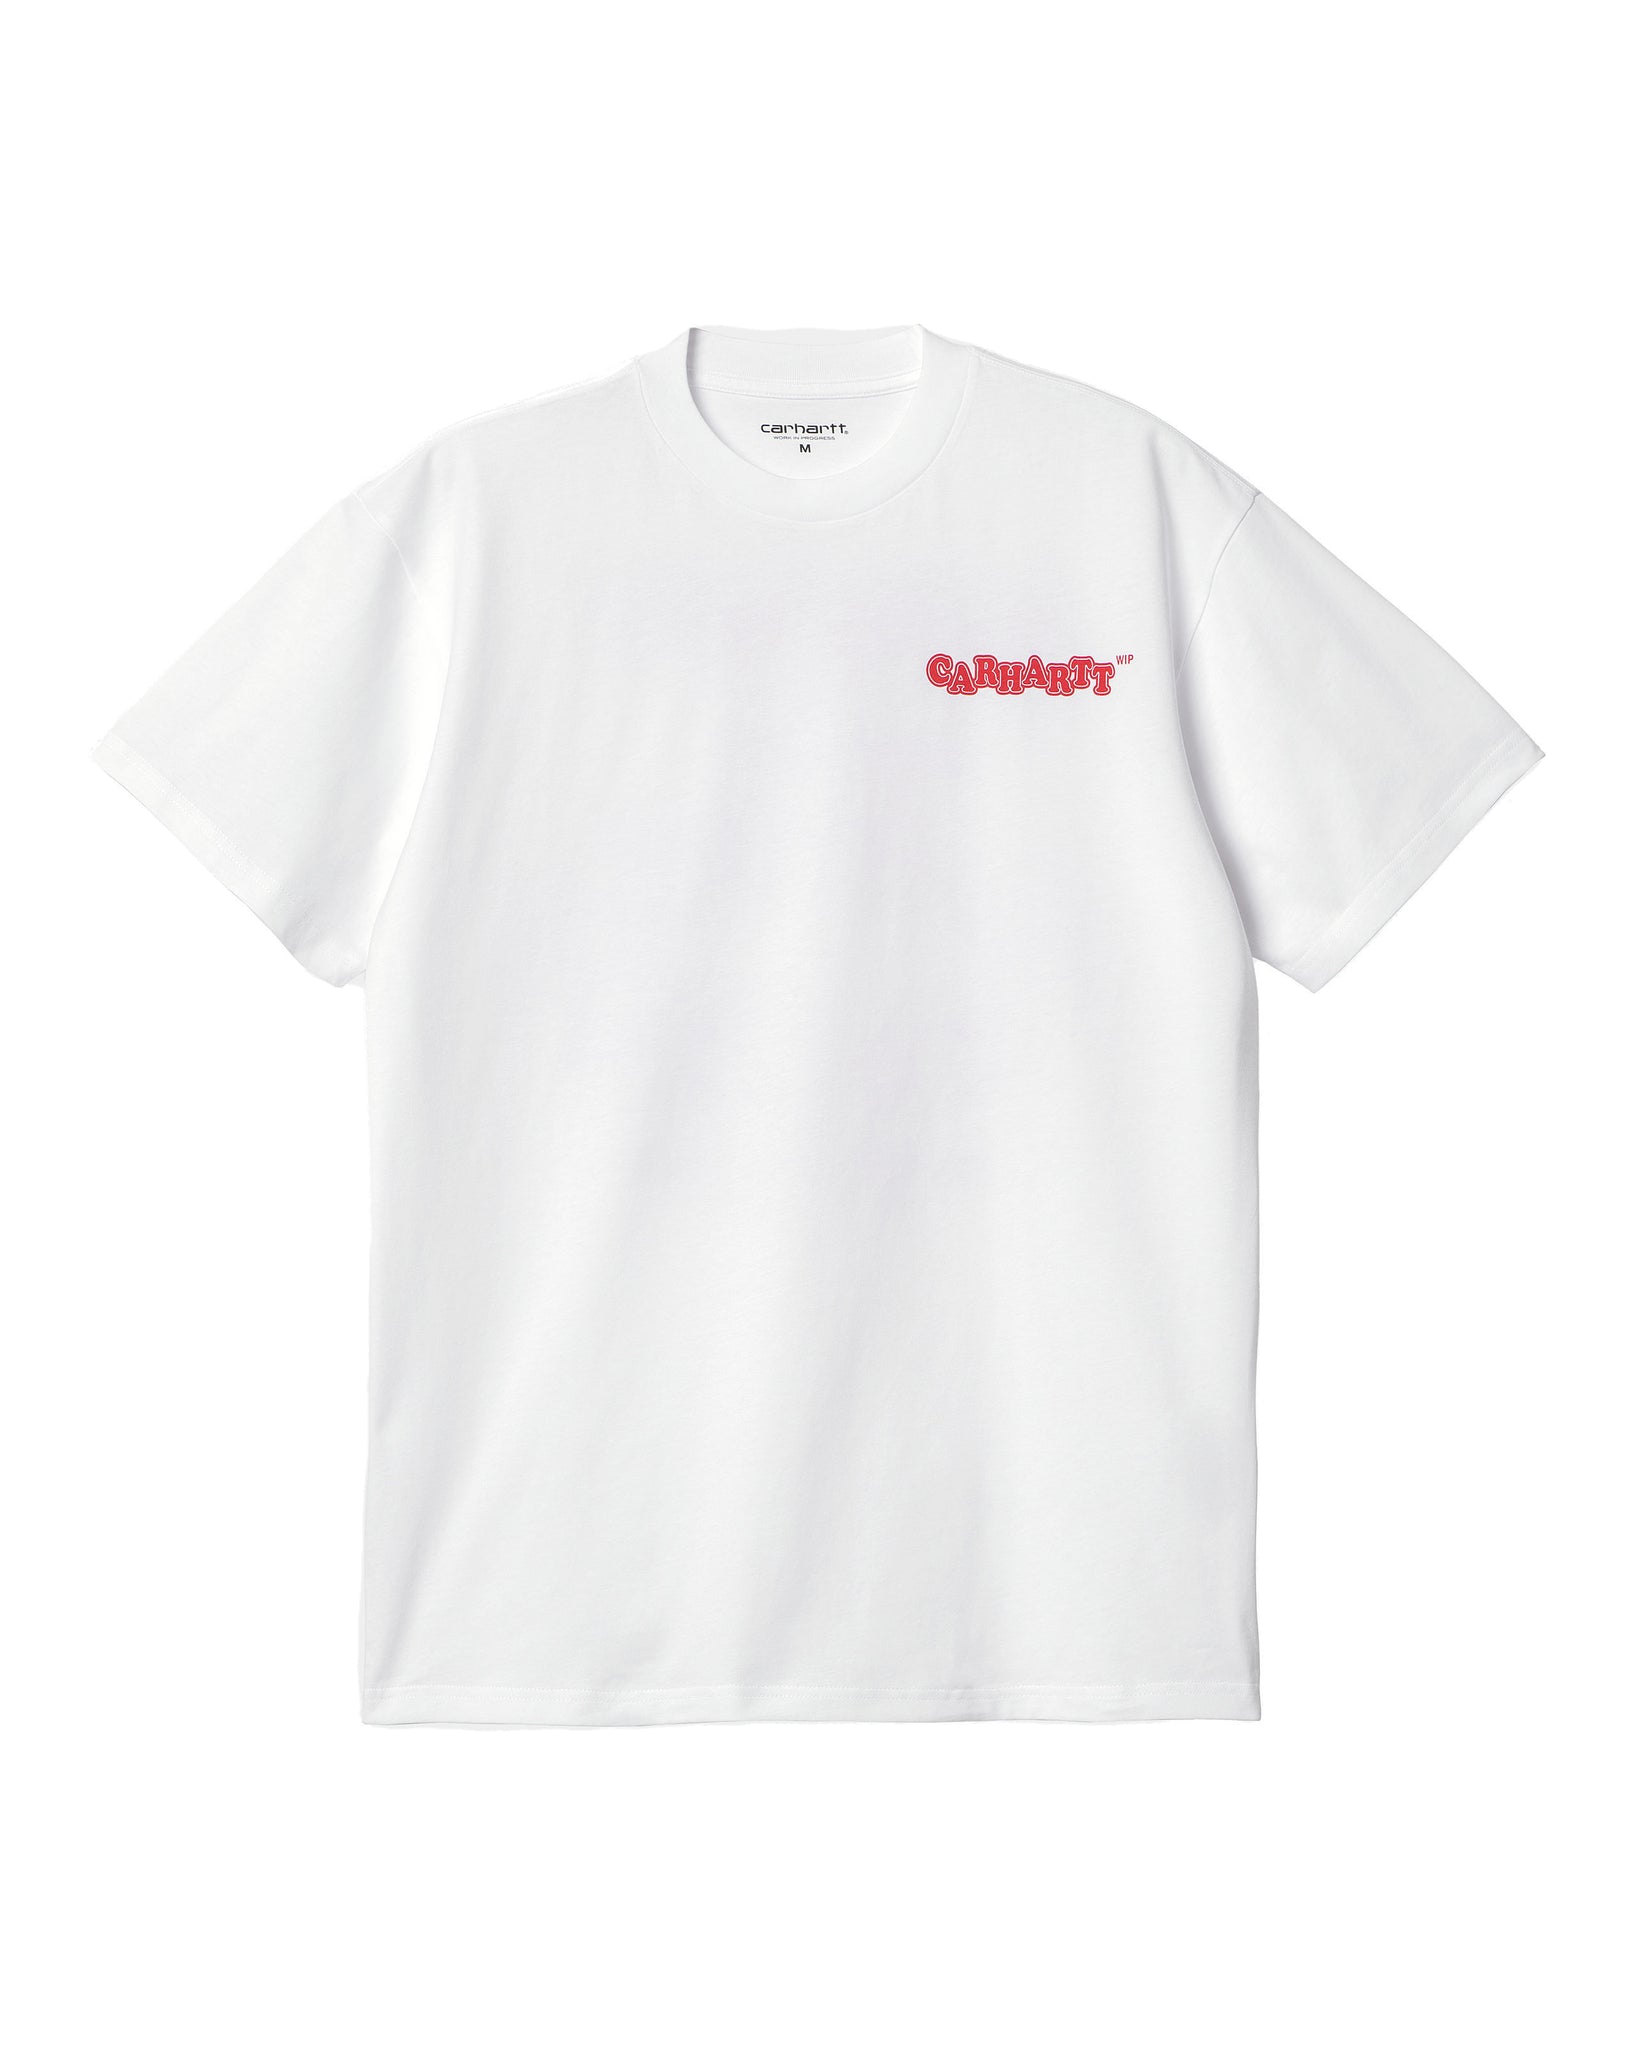 Camiseta S/S Fast Food - White/Red